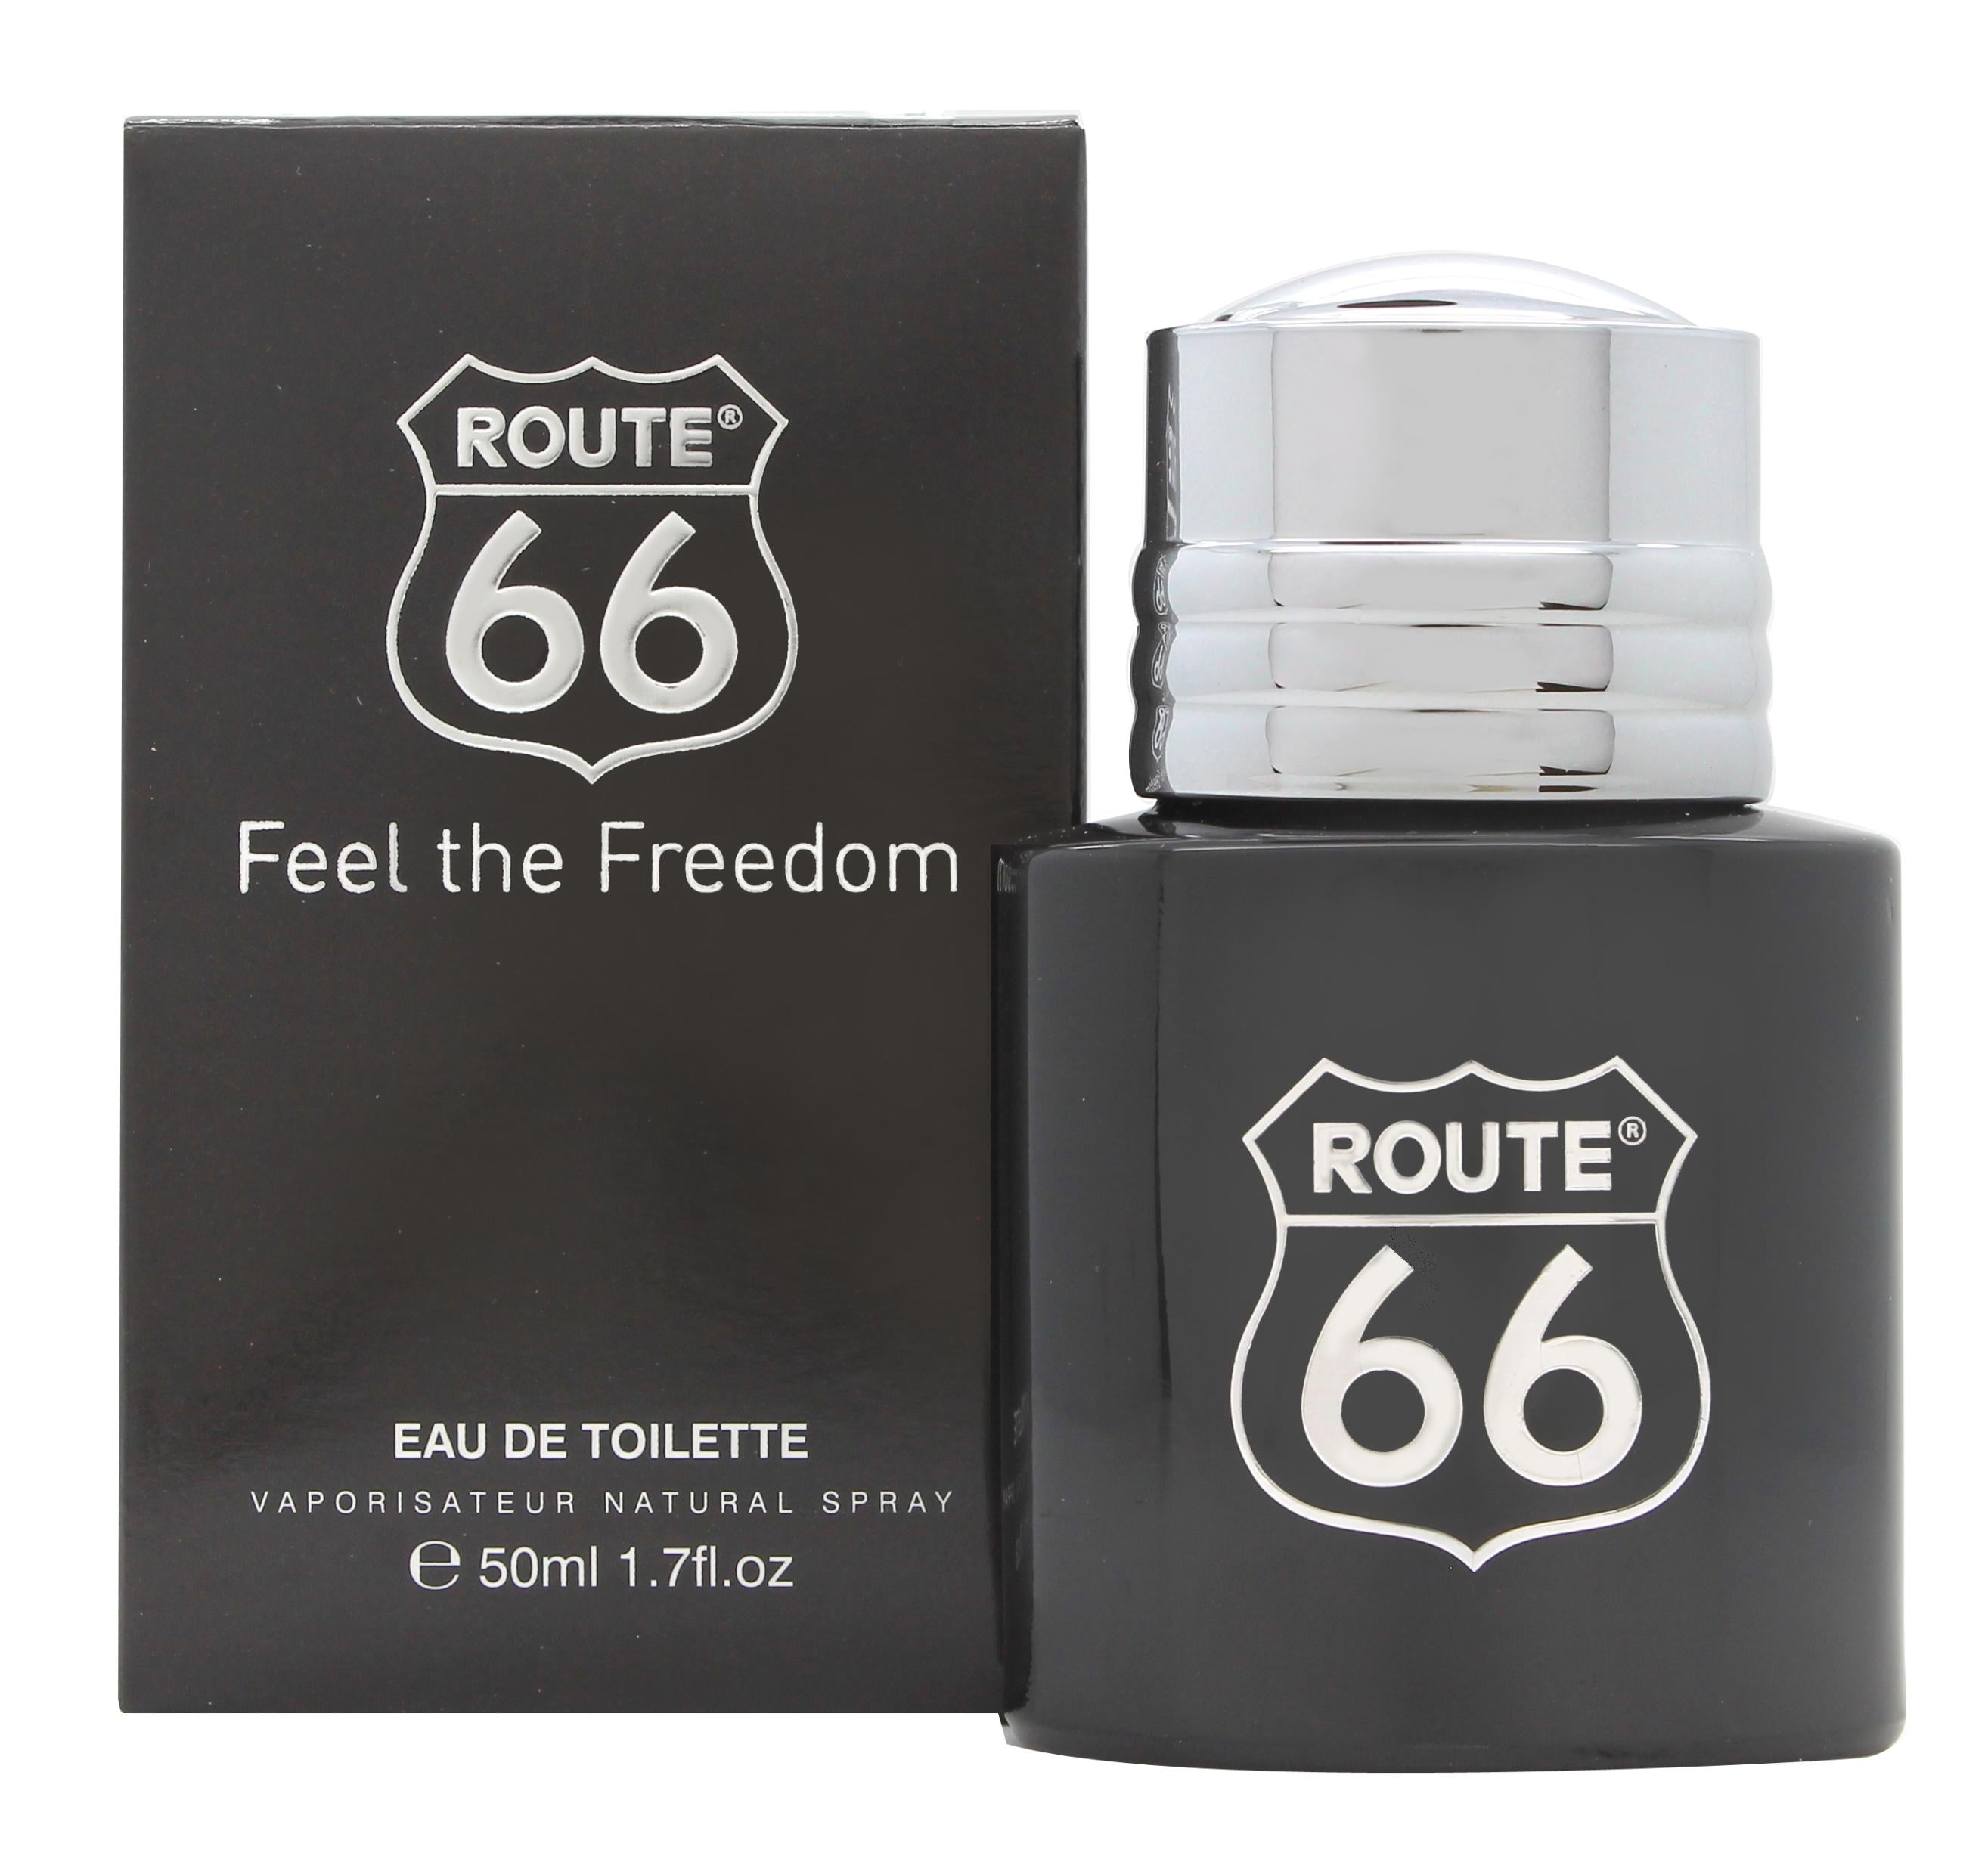 View Route 66 Feel The Freedom Eau de Toilette 50ml Spray information